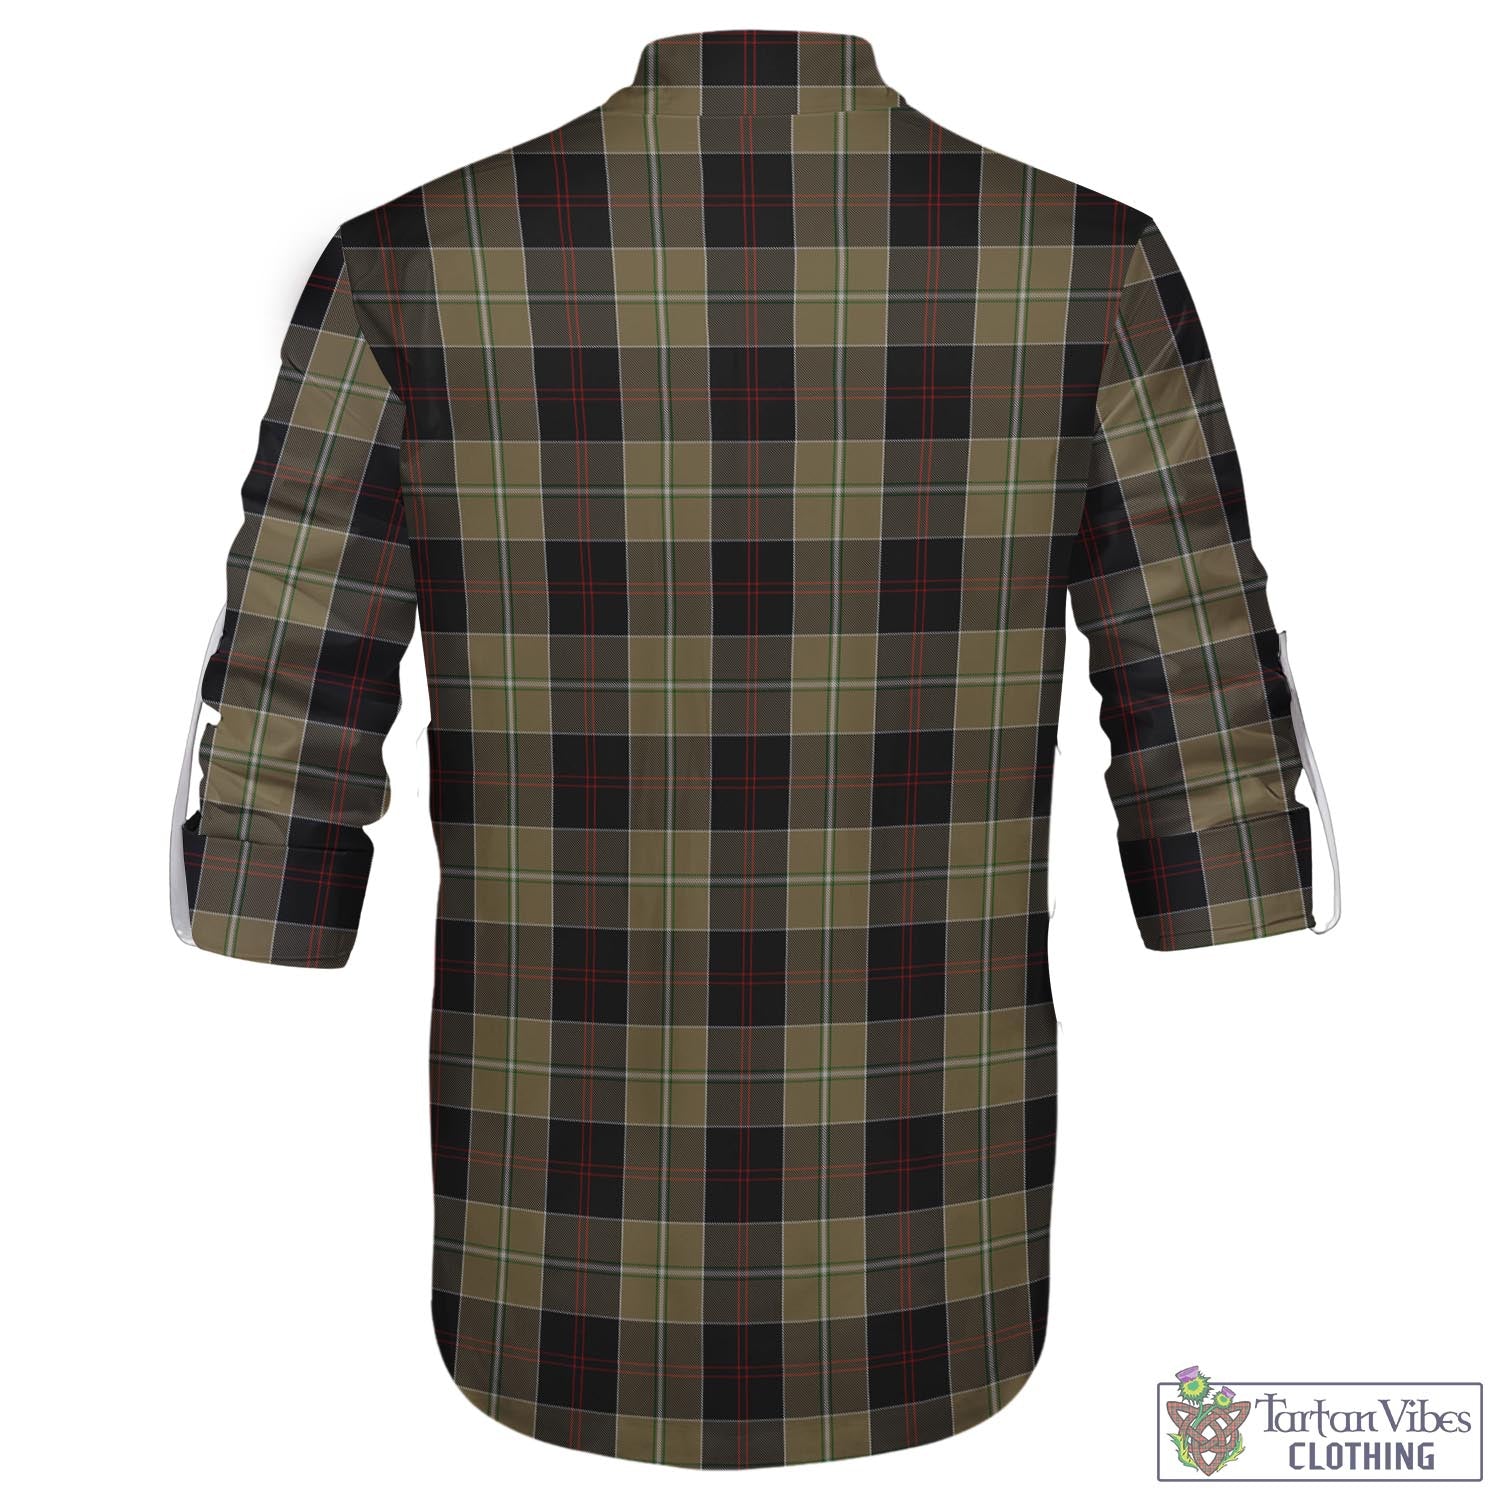 Tartan Vibes Clothing Dunlop Hunting Tartan Men's Scottish Traditional Jacobite Ghillie Kilt Shirt with Family Crest